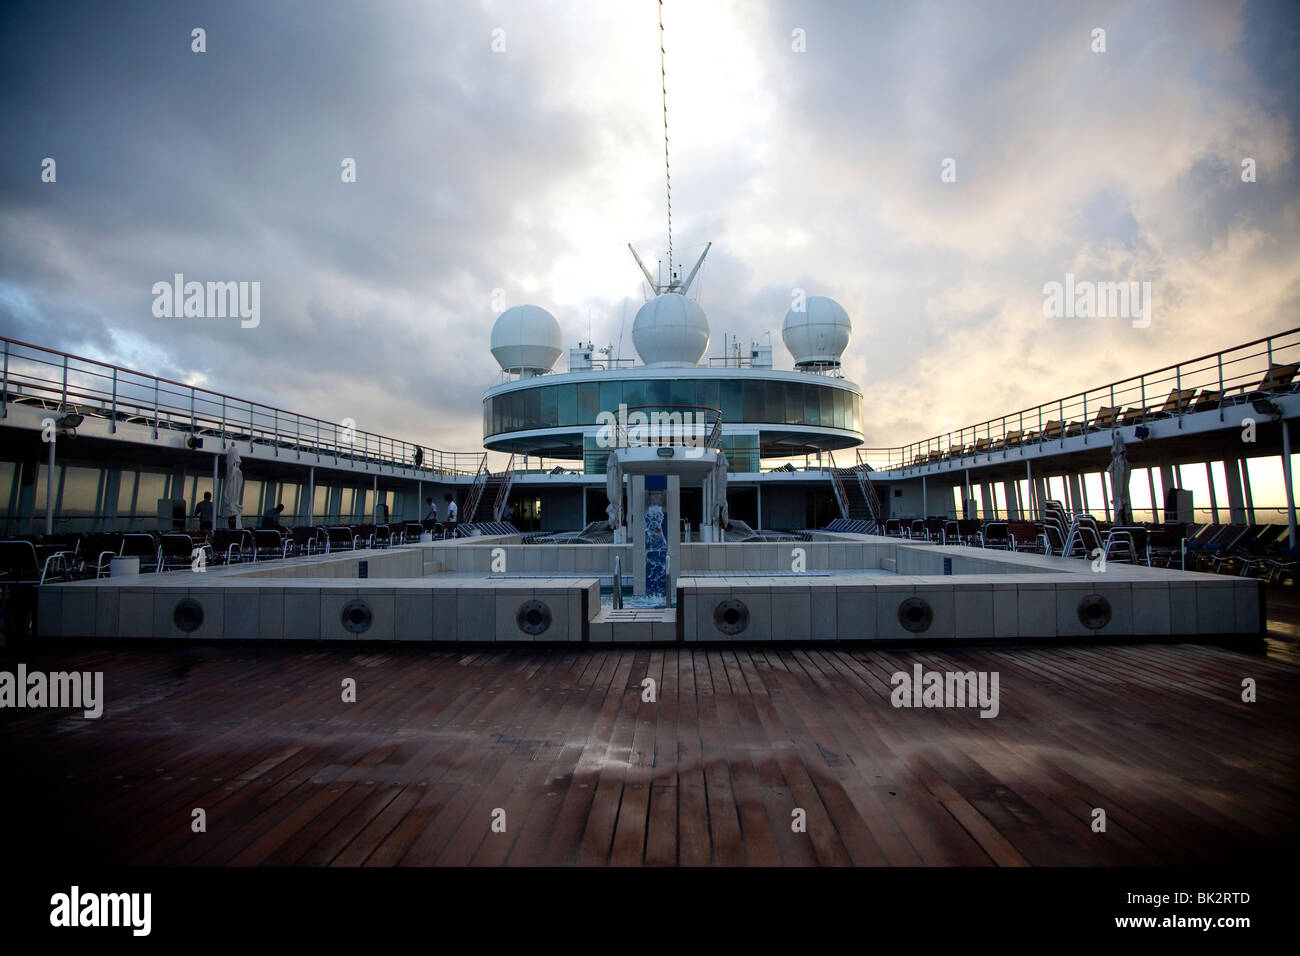 Costa Classica cruise liner. Stock Photo